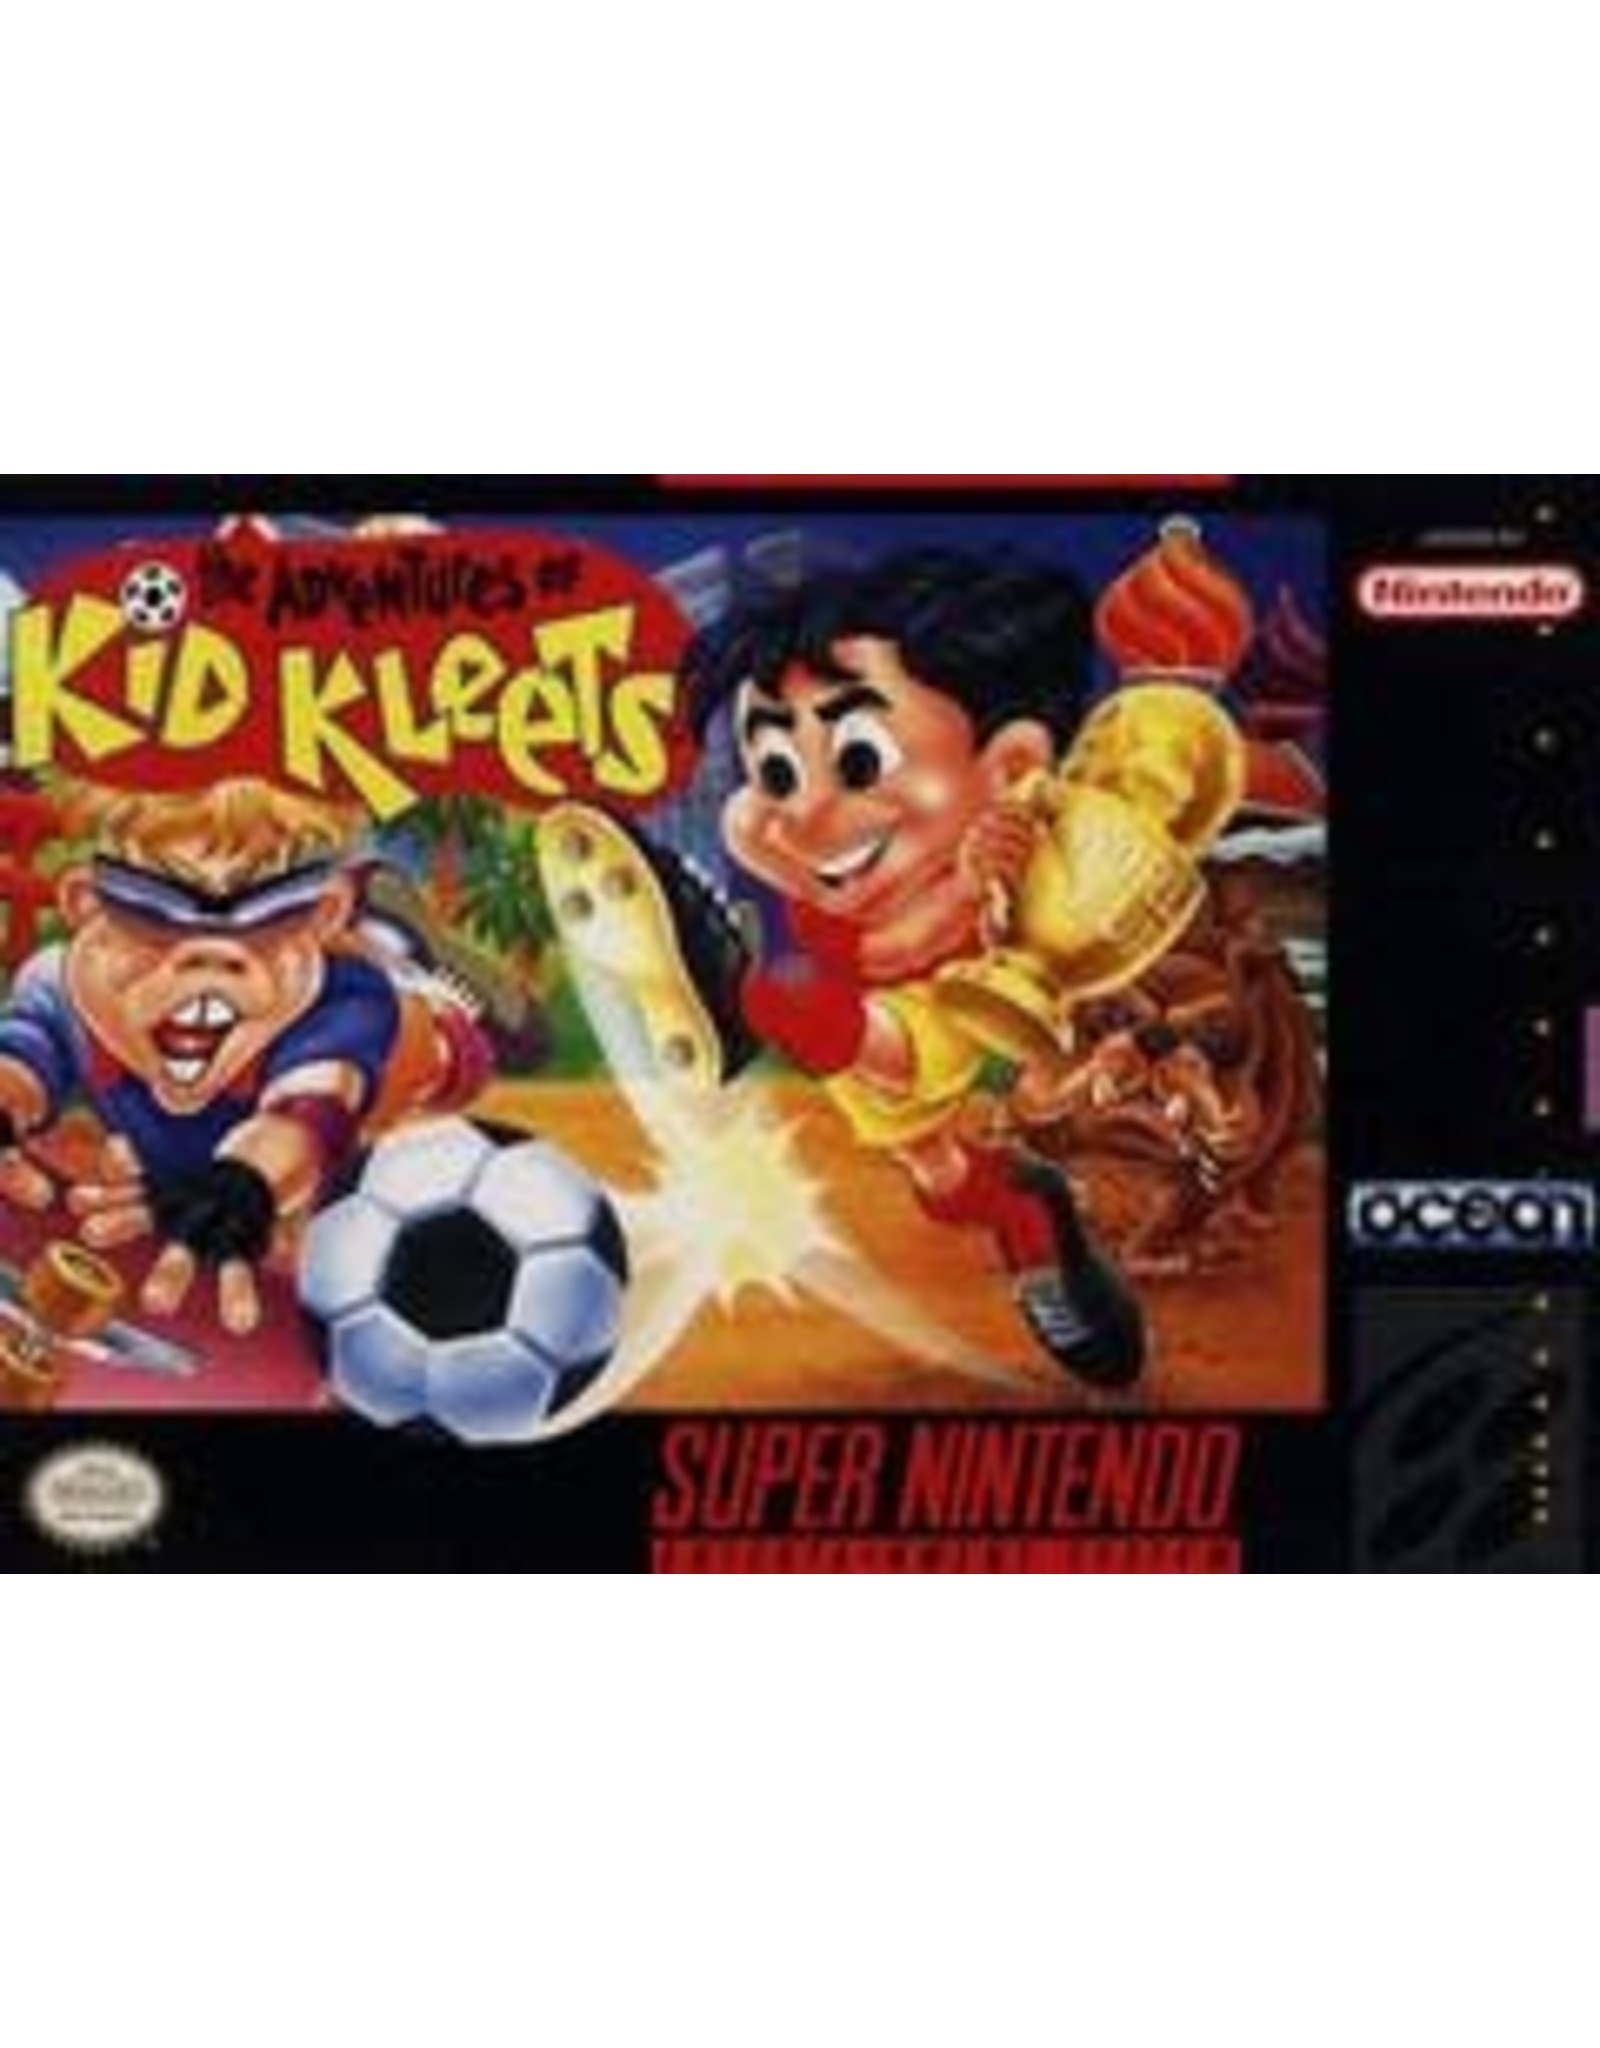 Super Nintendo Adventures of Kid Kleets (CiB, Badly Damaged Box and Manual)